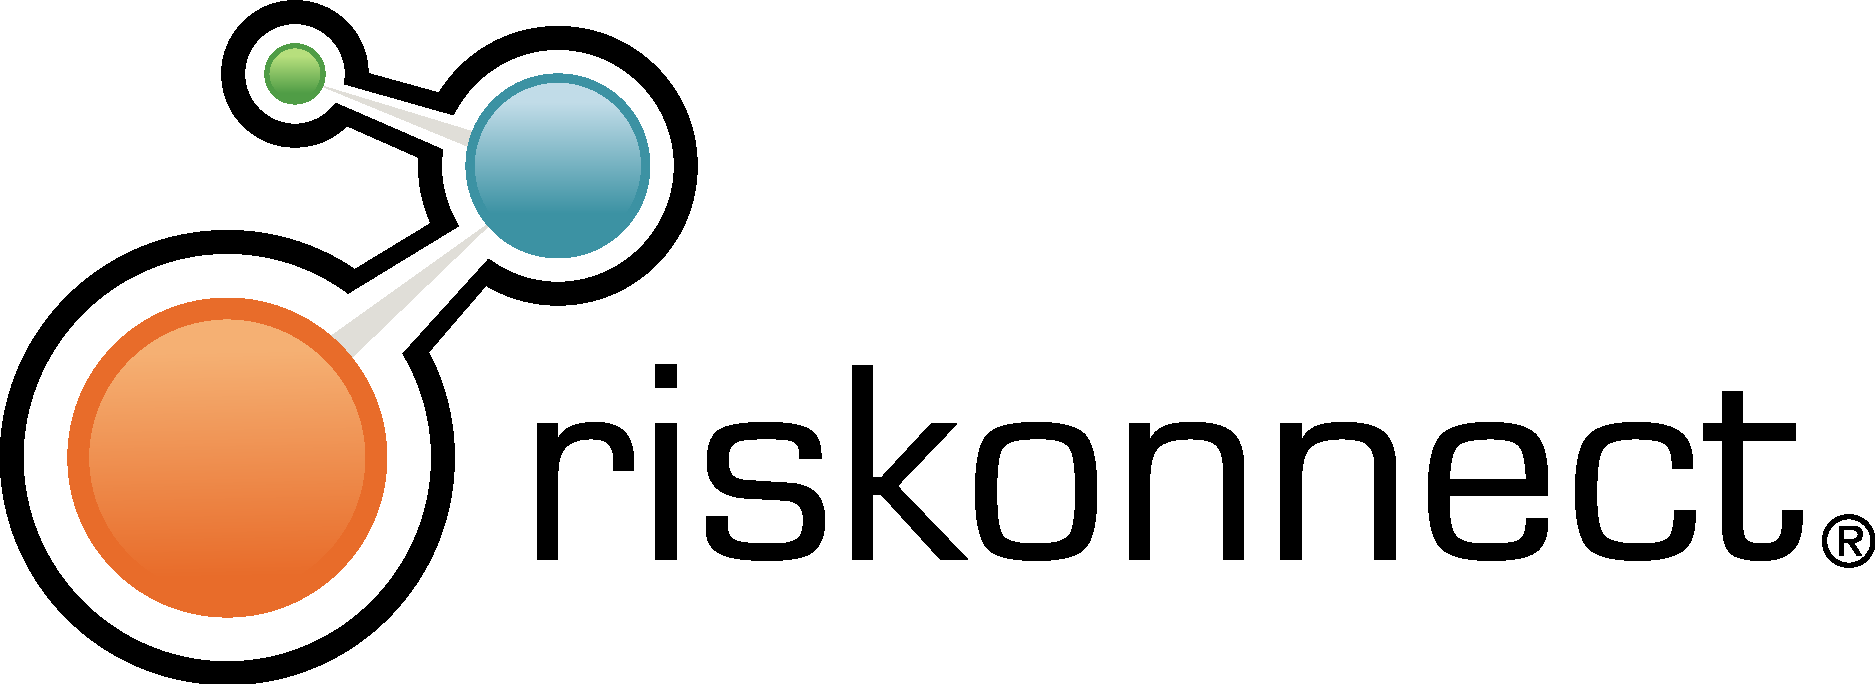 Riskonnect Logo Vector